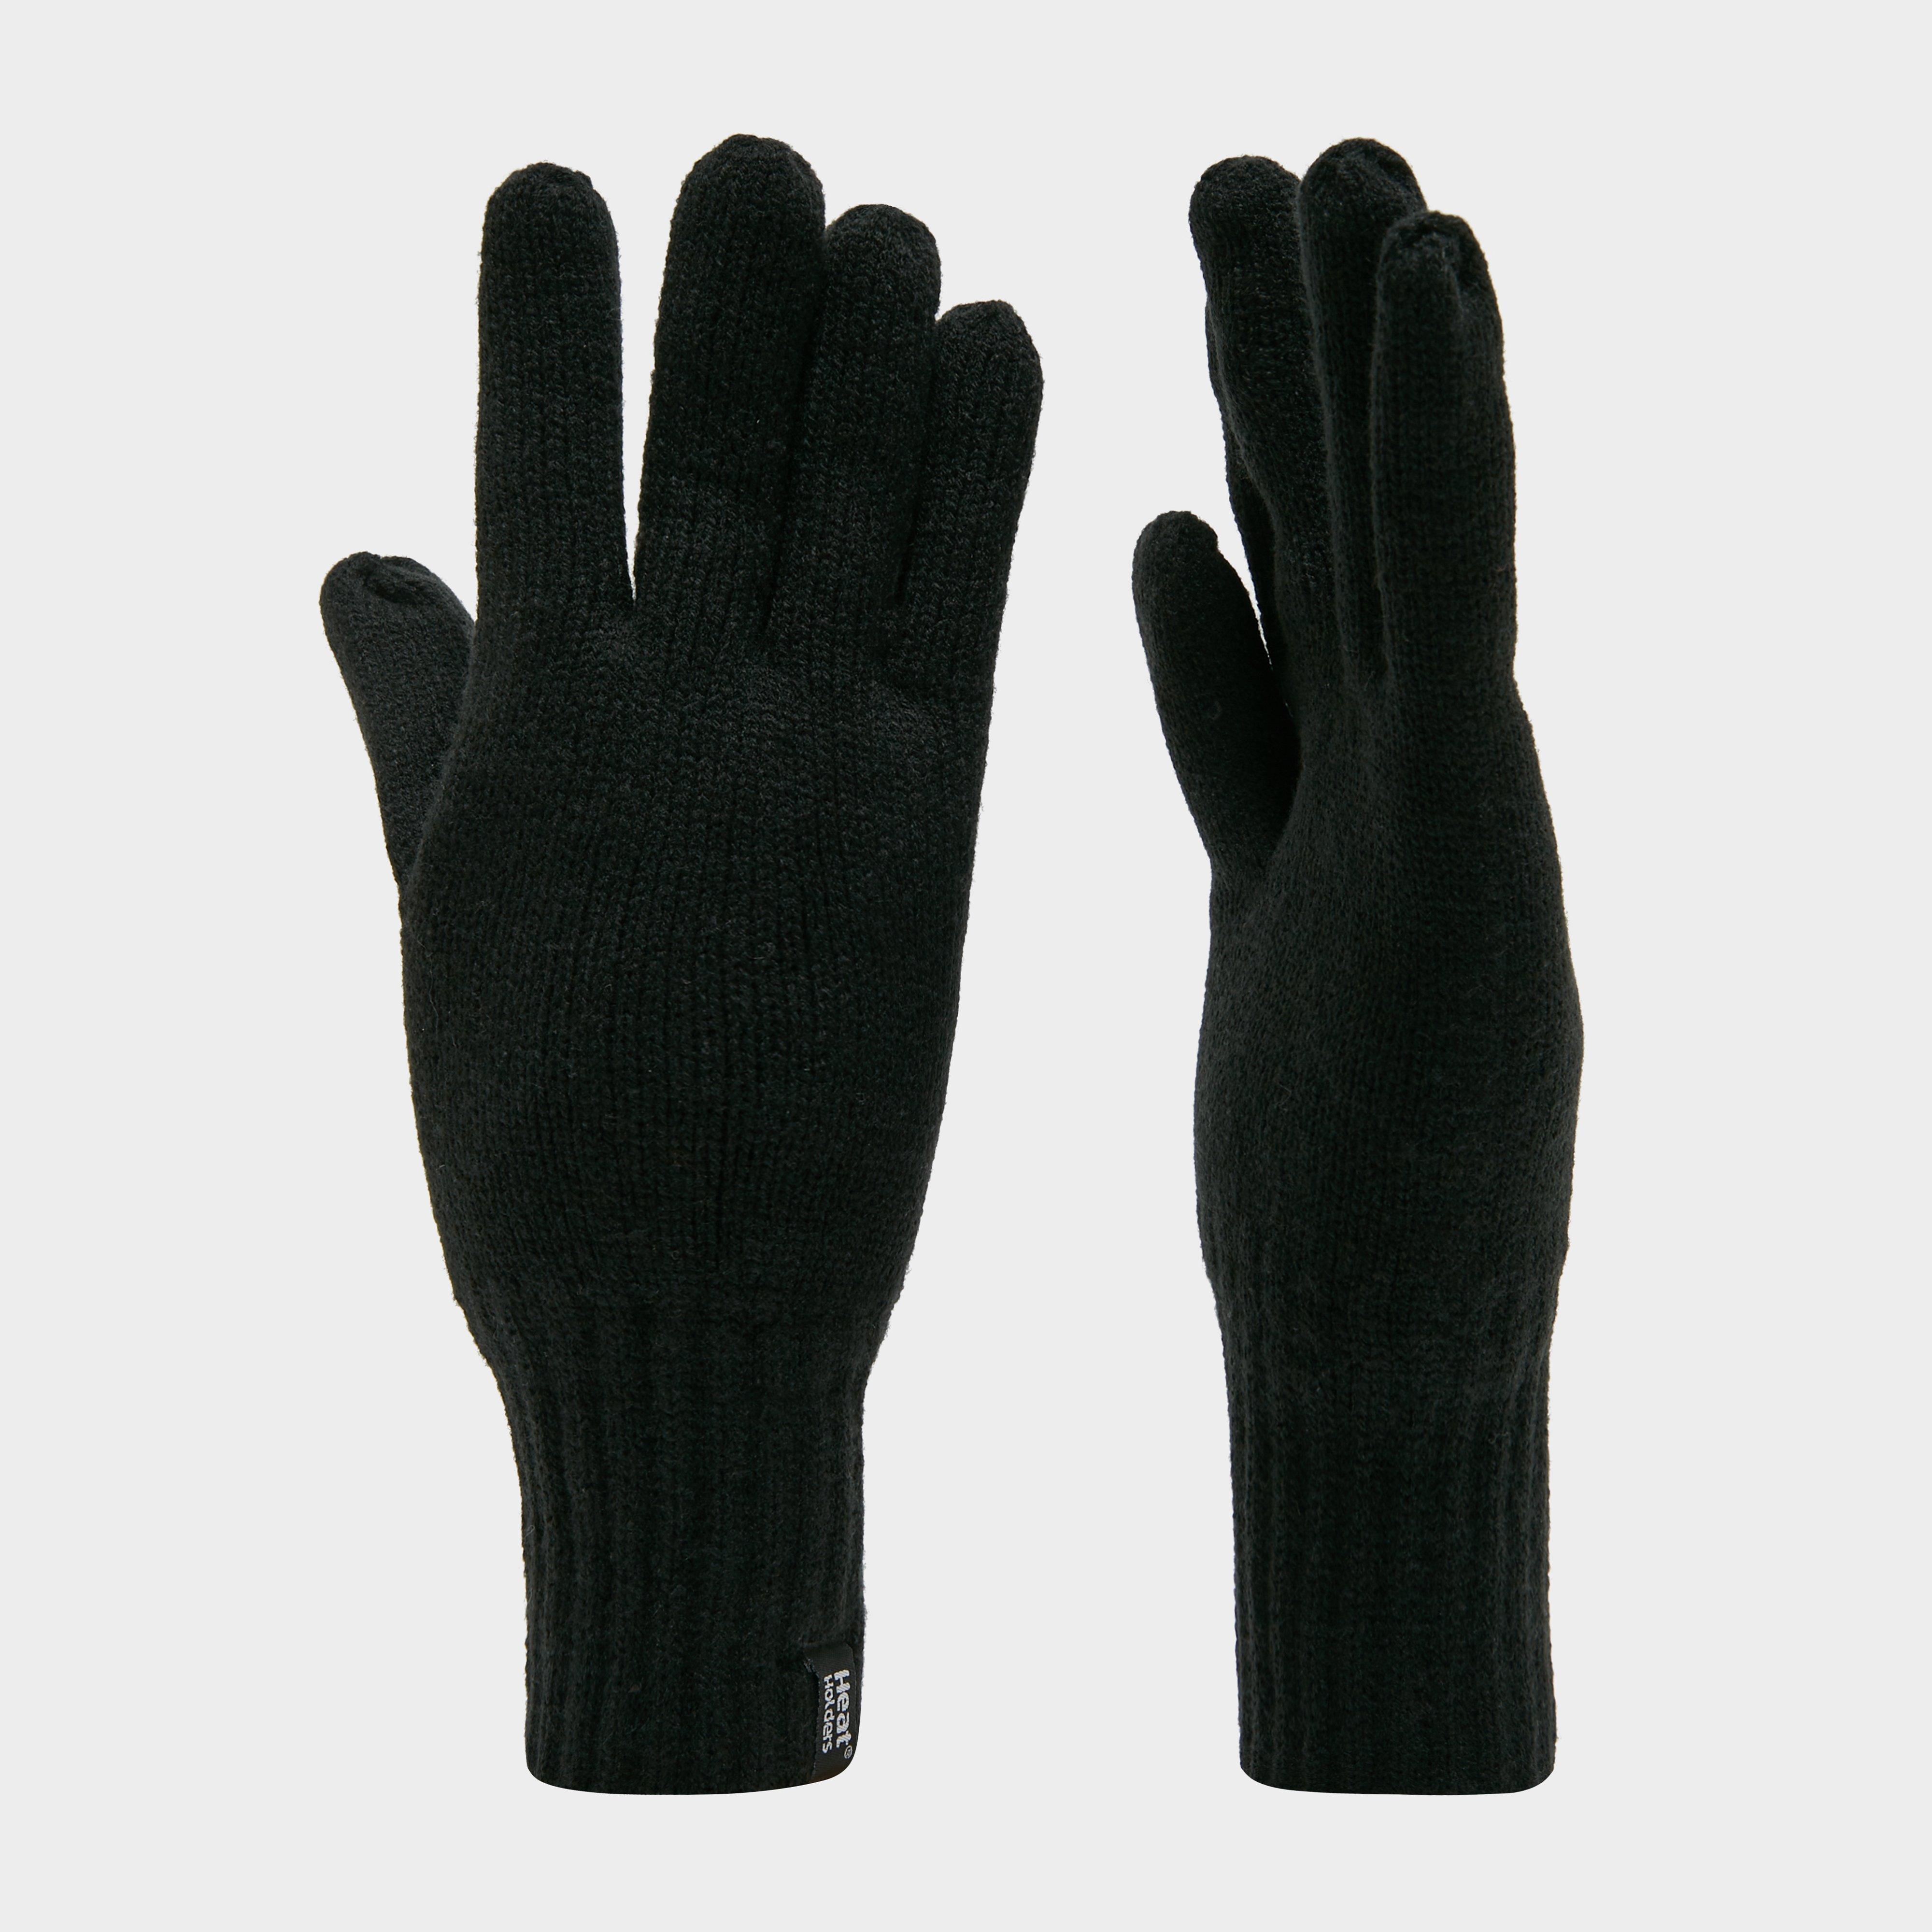 Heat Holders Mens Thermal Gloves - Black/black  Black/black